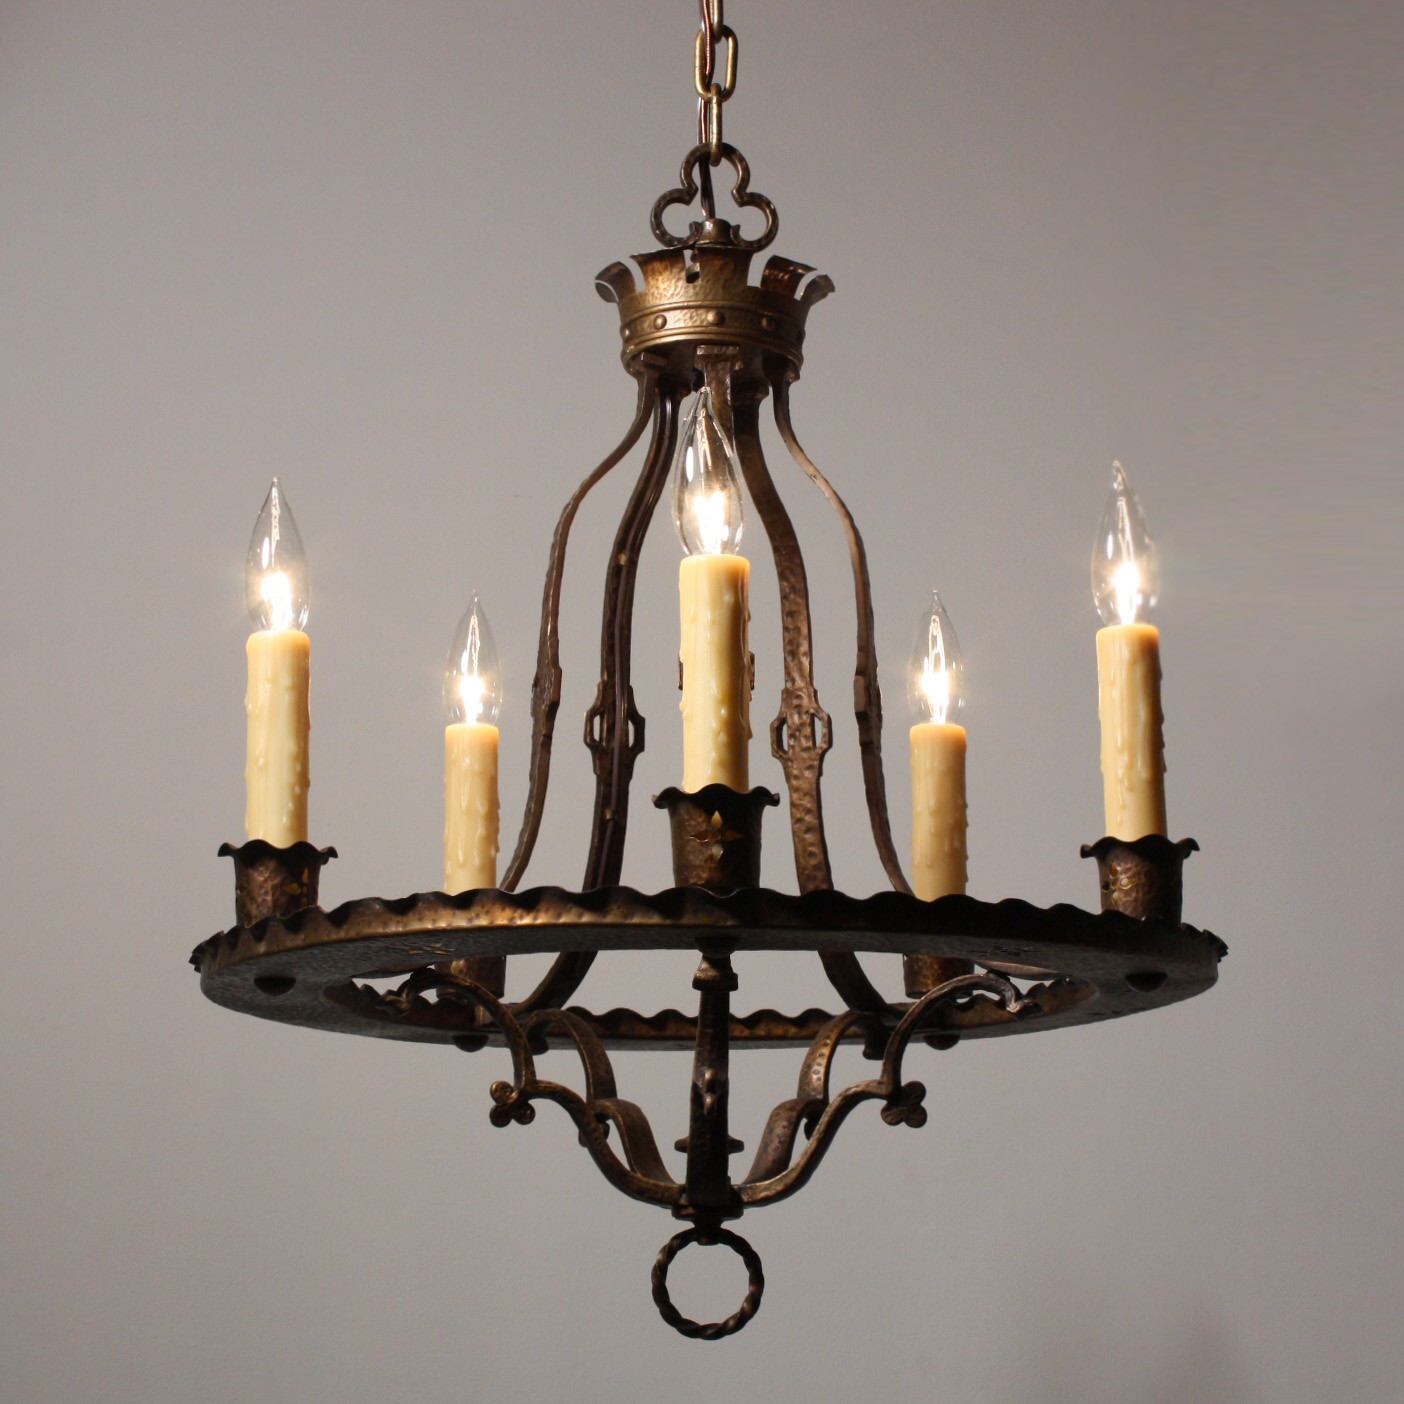 Attractive antique gothic revival five light cast brass